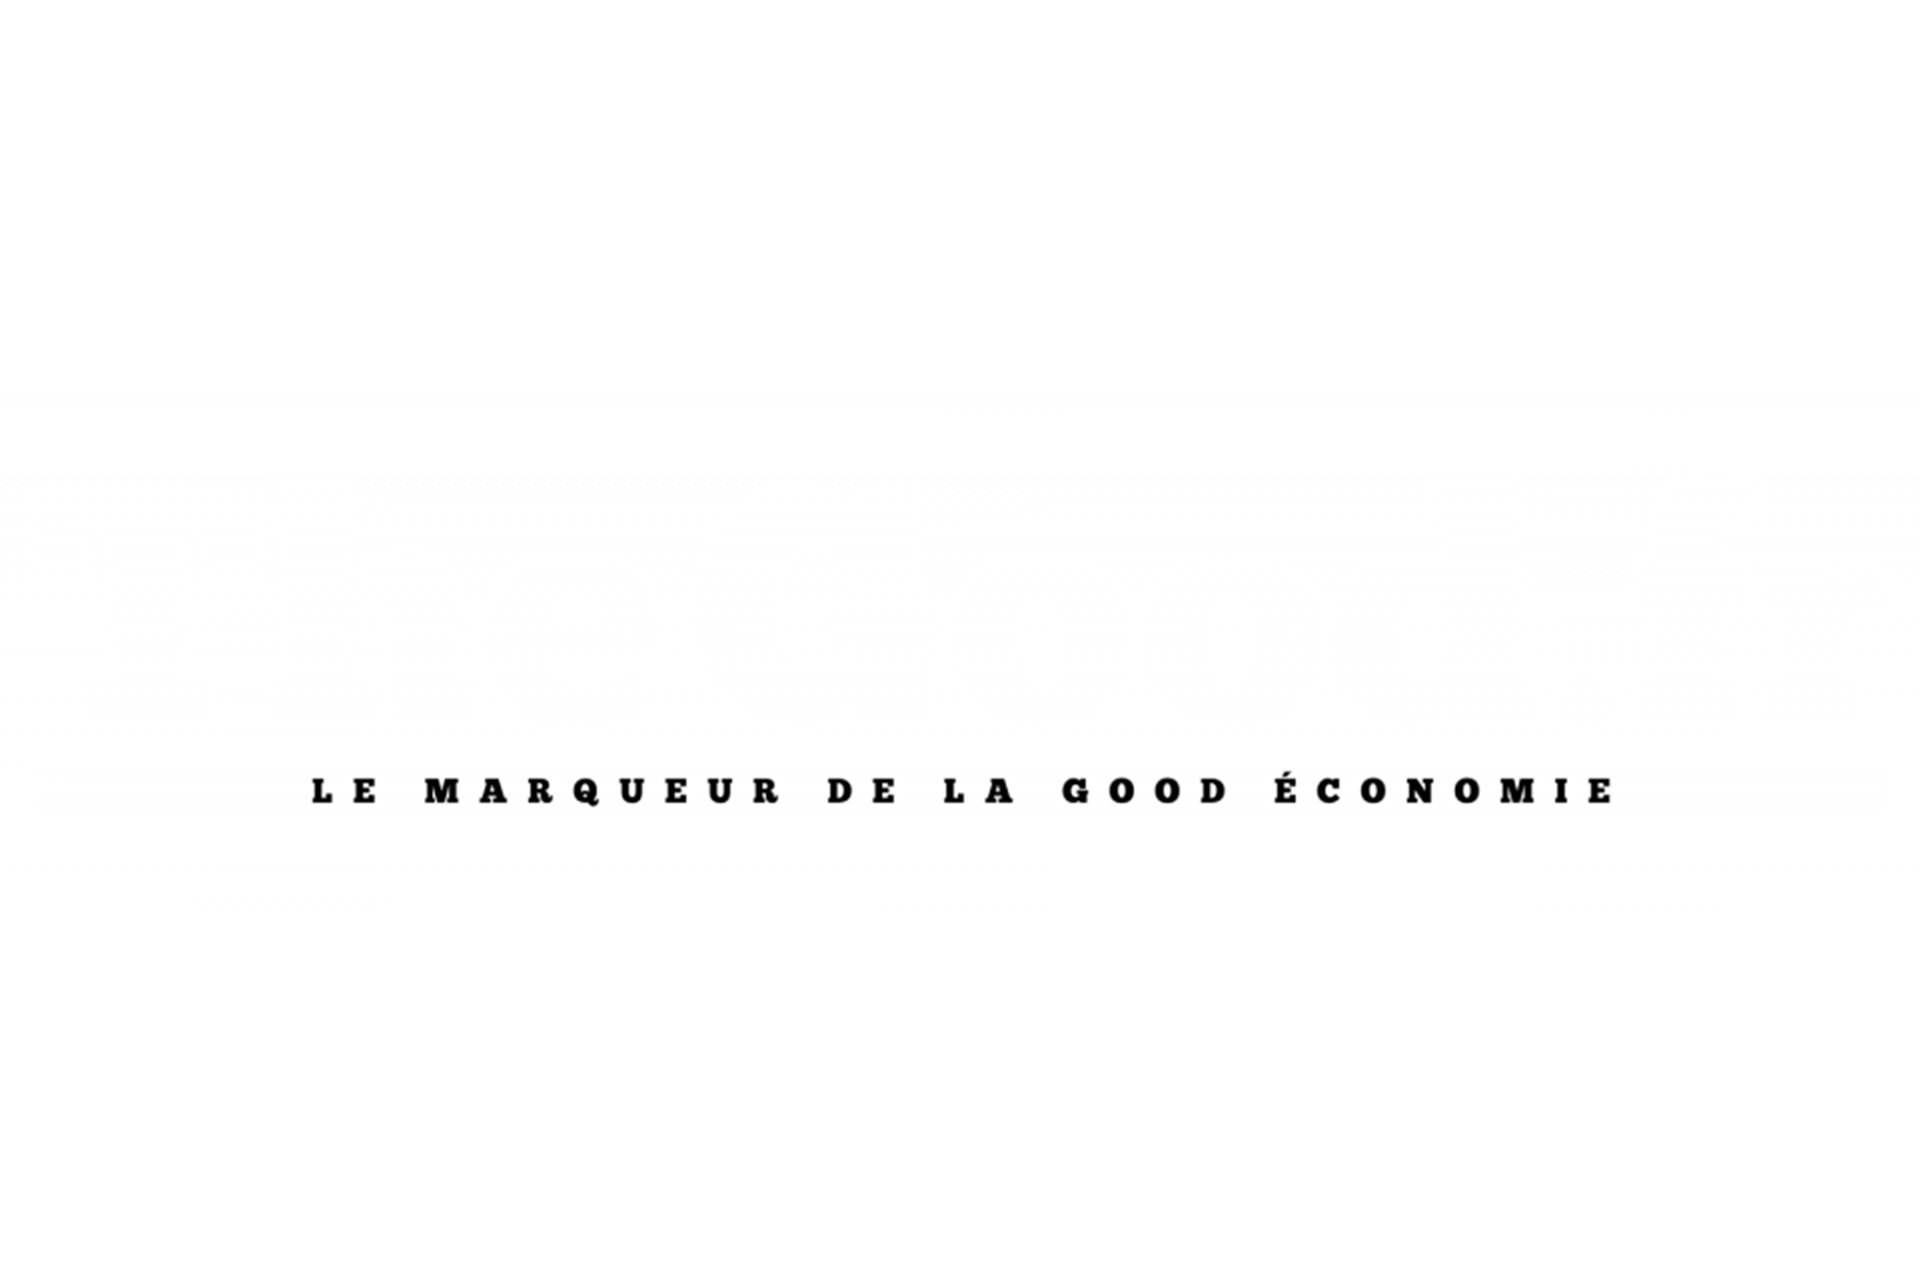 The Good, le manifeste - TheGood